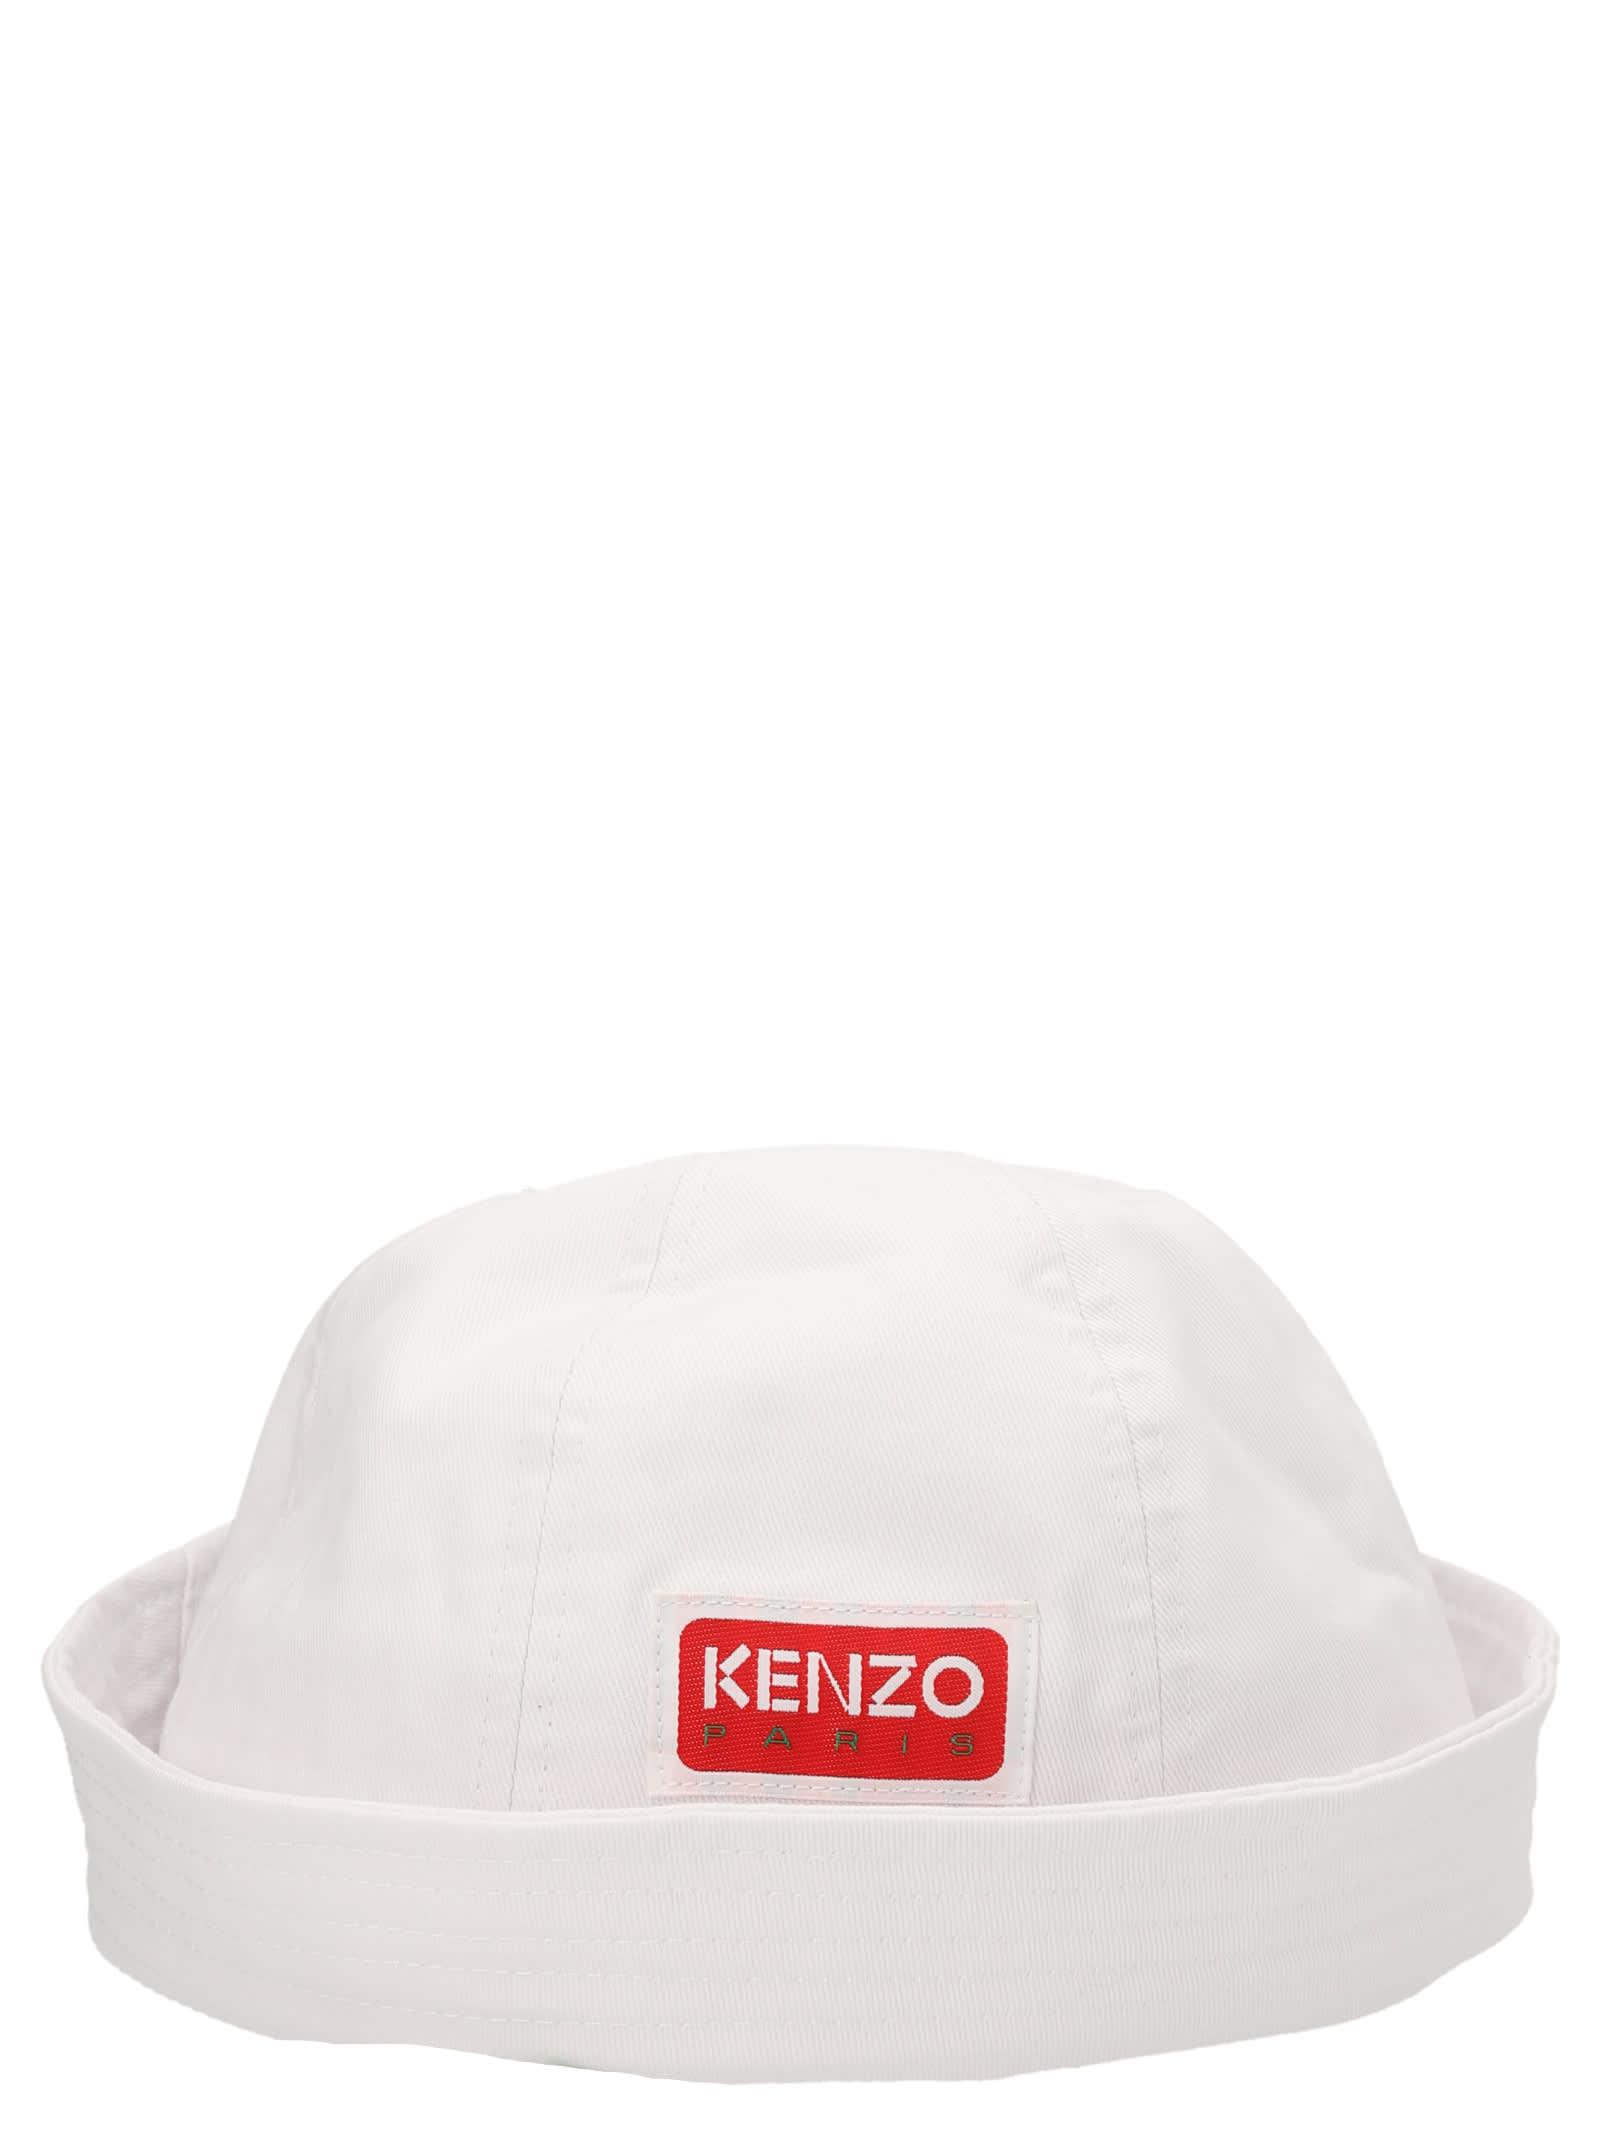 KENZO Sailor Bucket Hat in White | Lyst